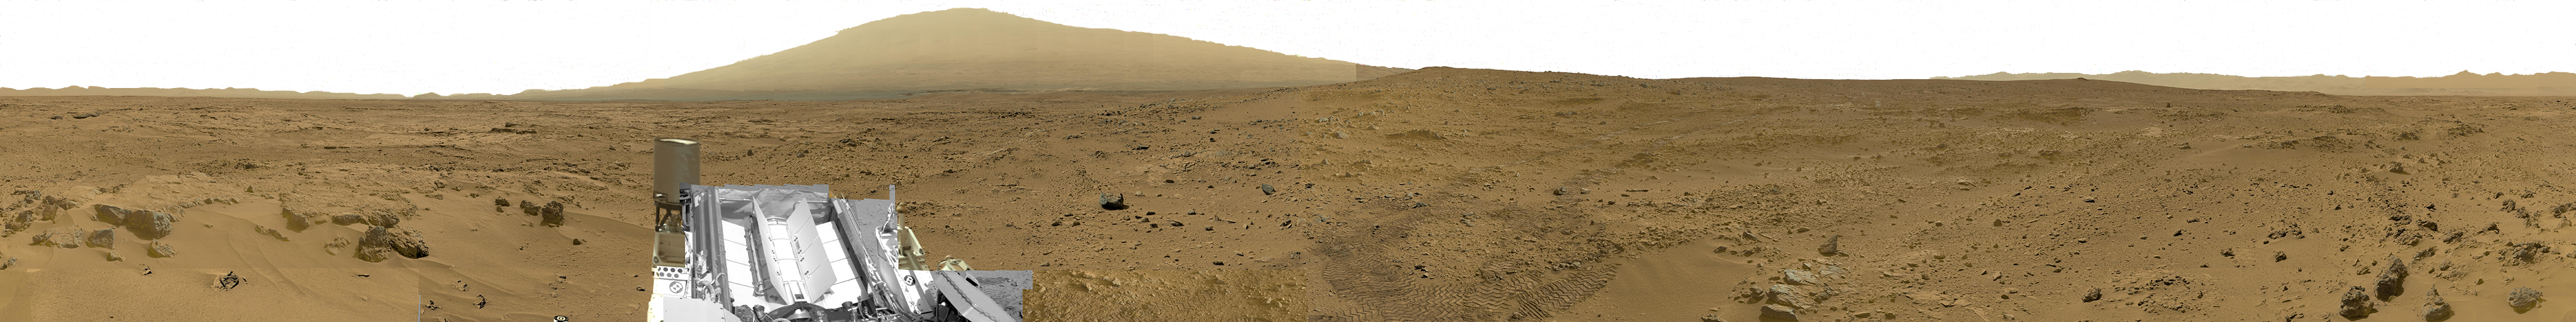 MSL Curiosity at Rocknest site in Gale Crater